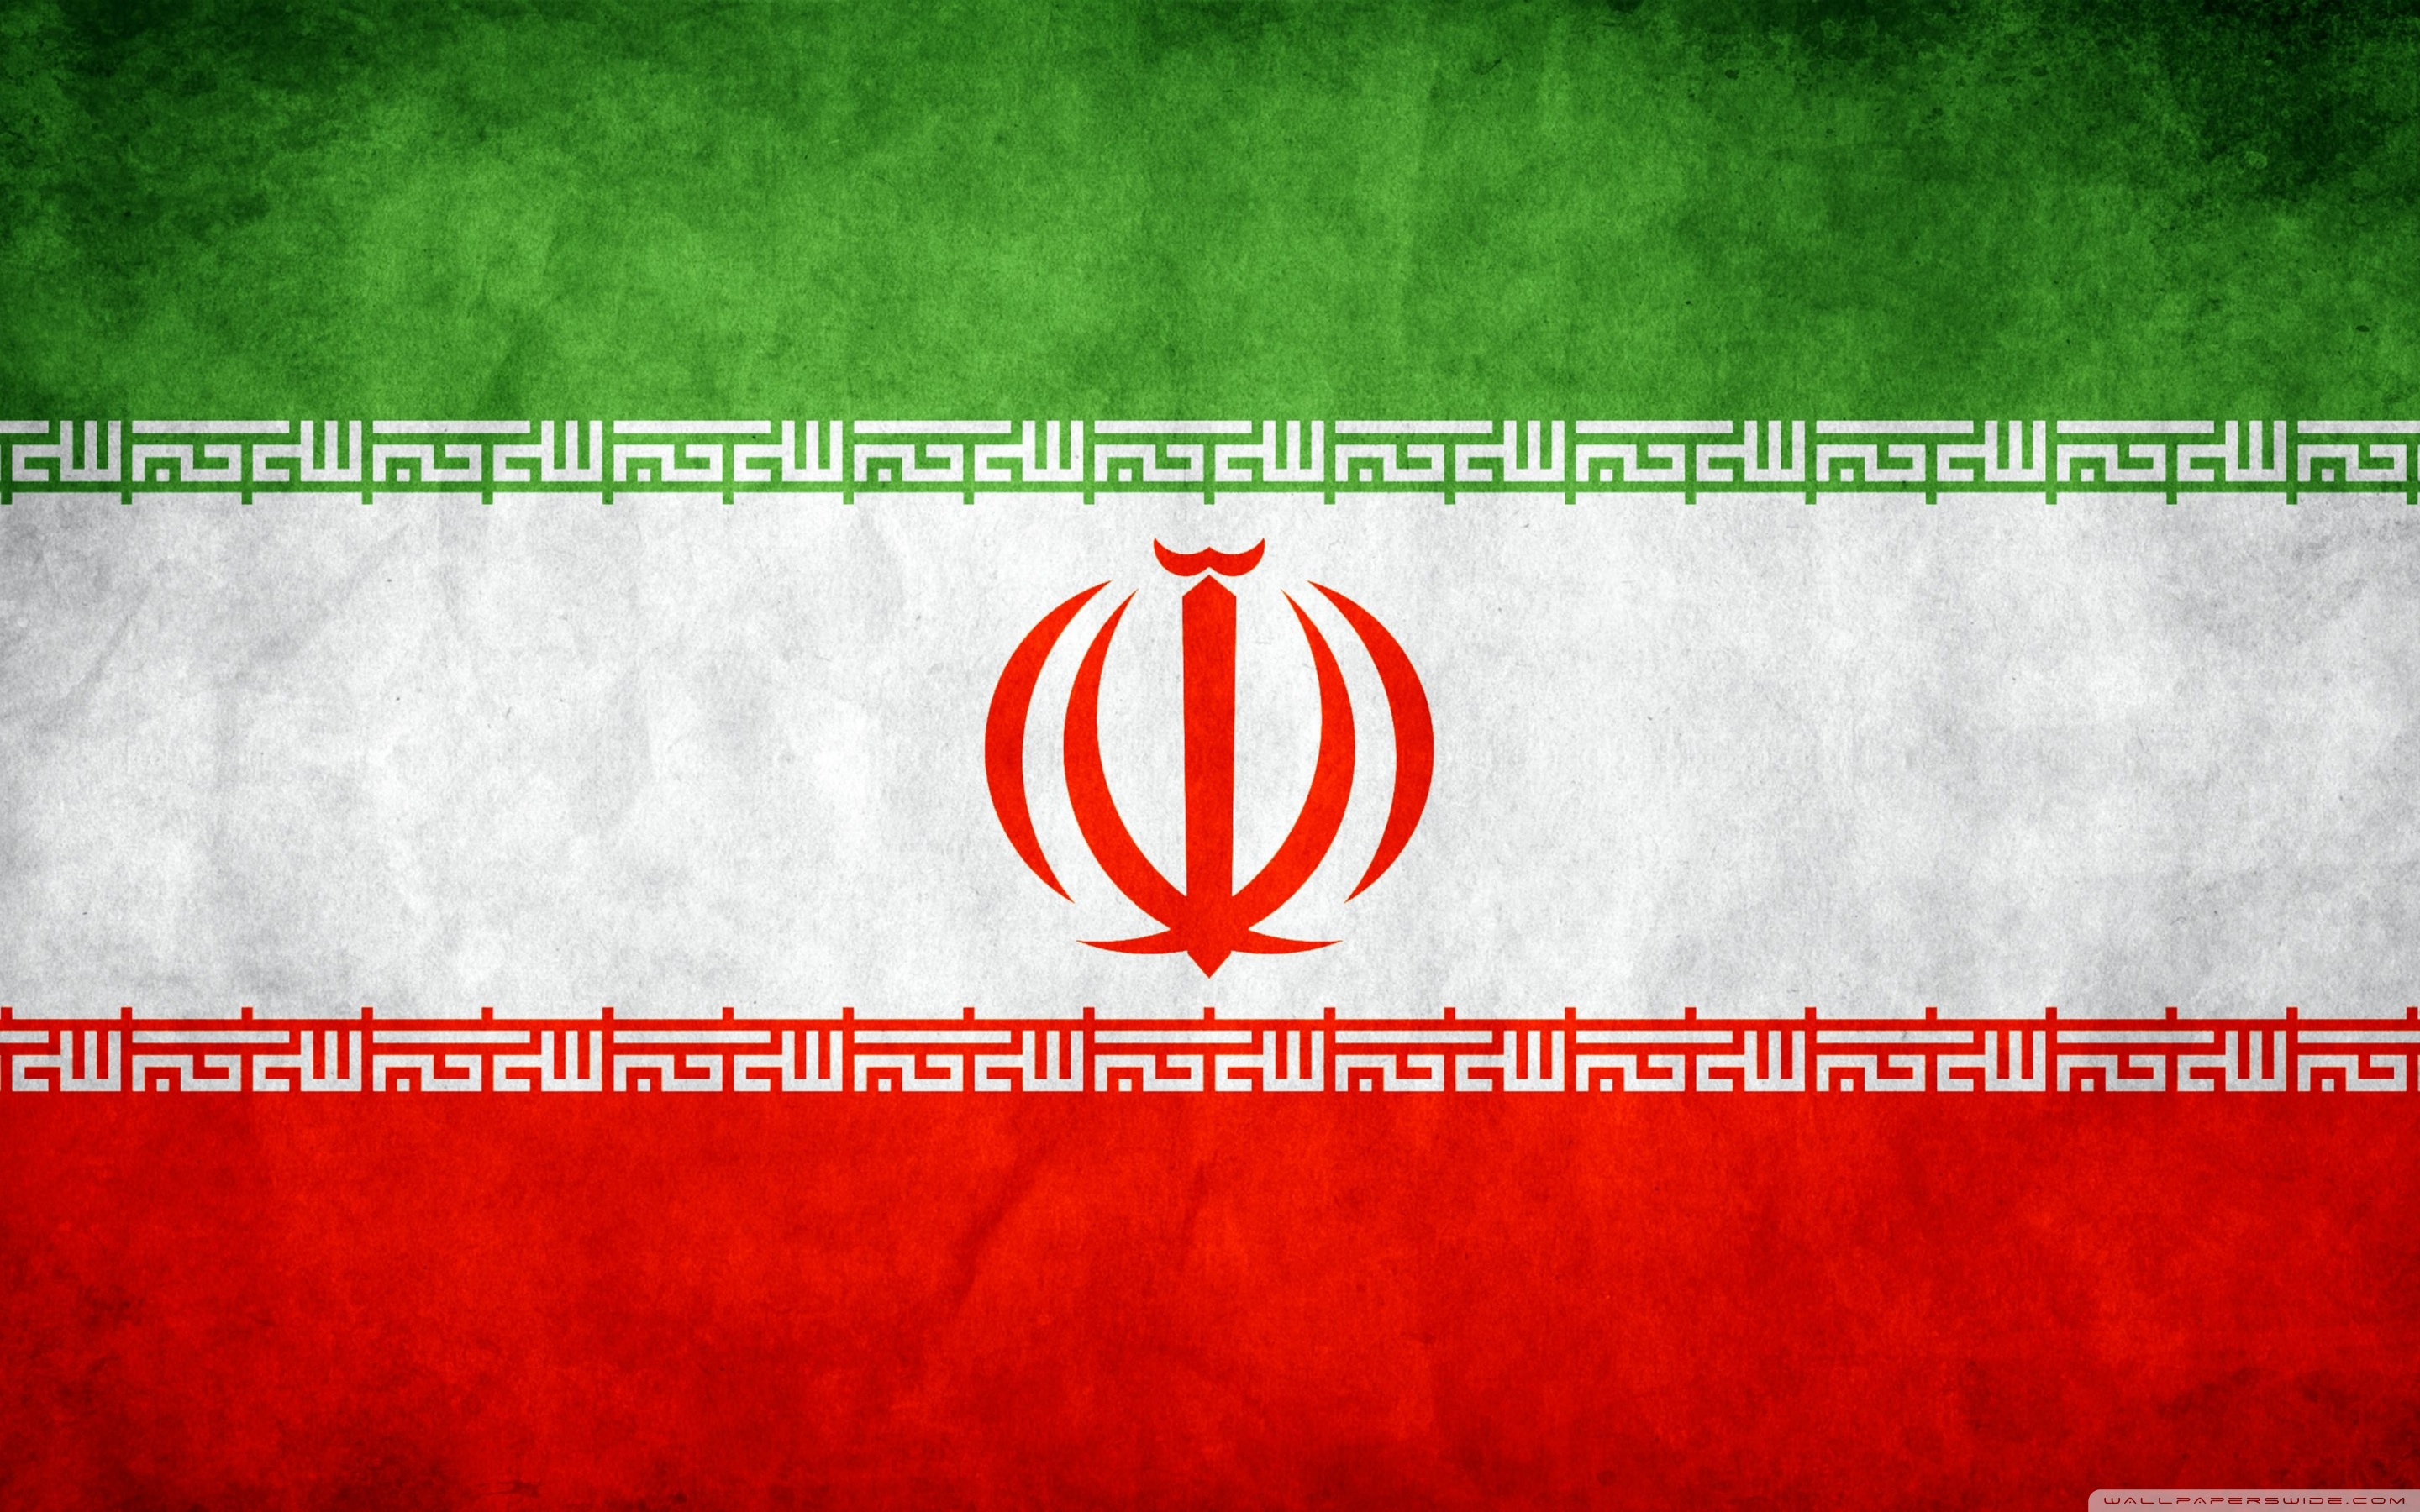 Flag Of Iran 4k HD Desktop Wallpaper For Ultra Tv Wide